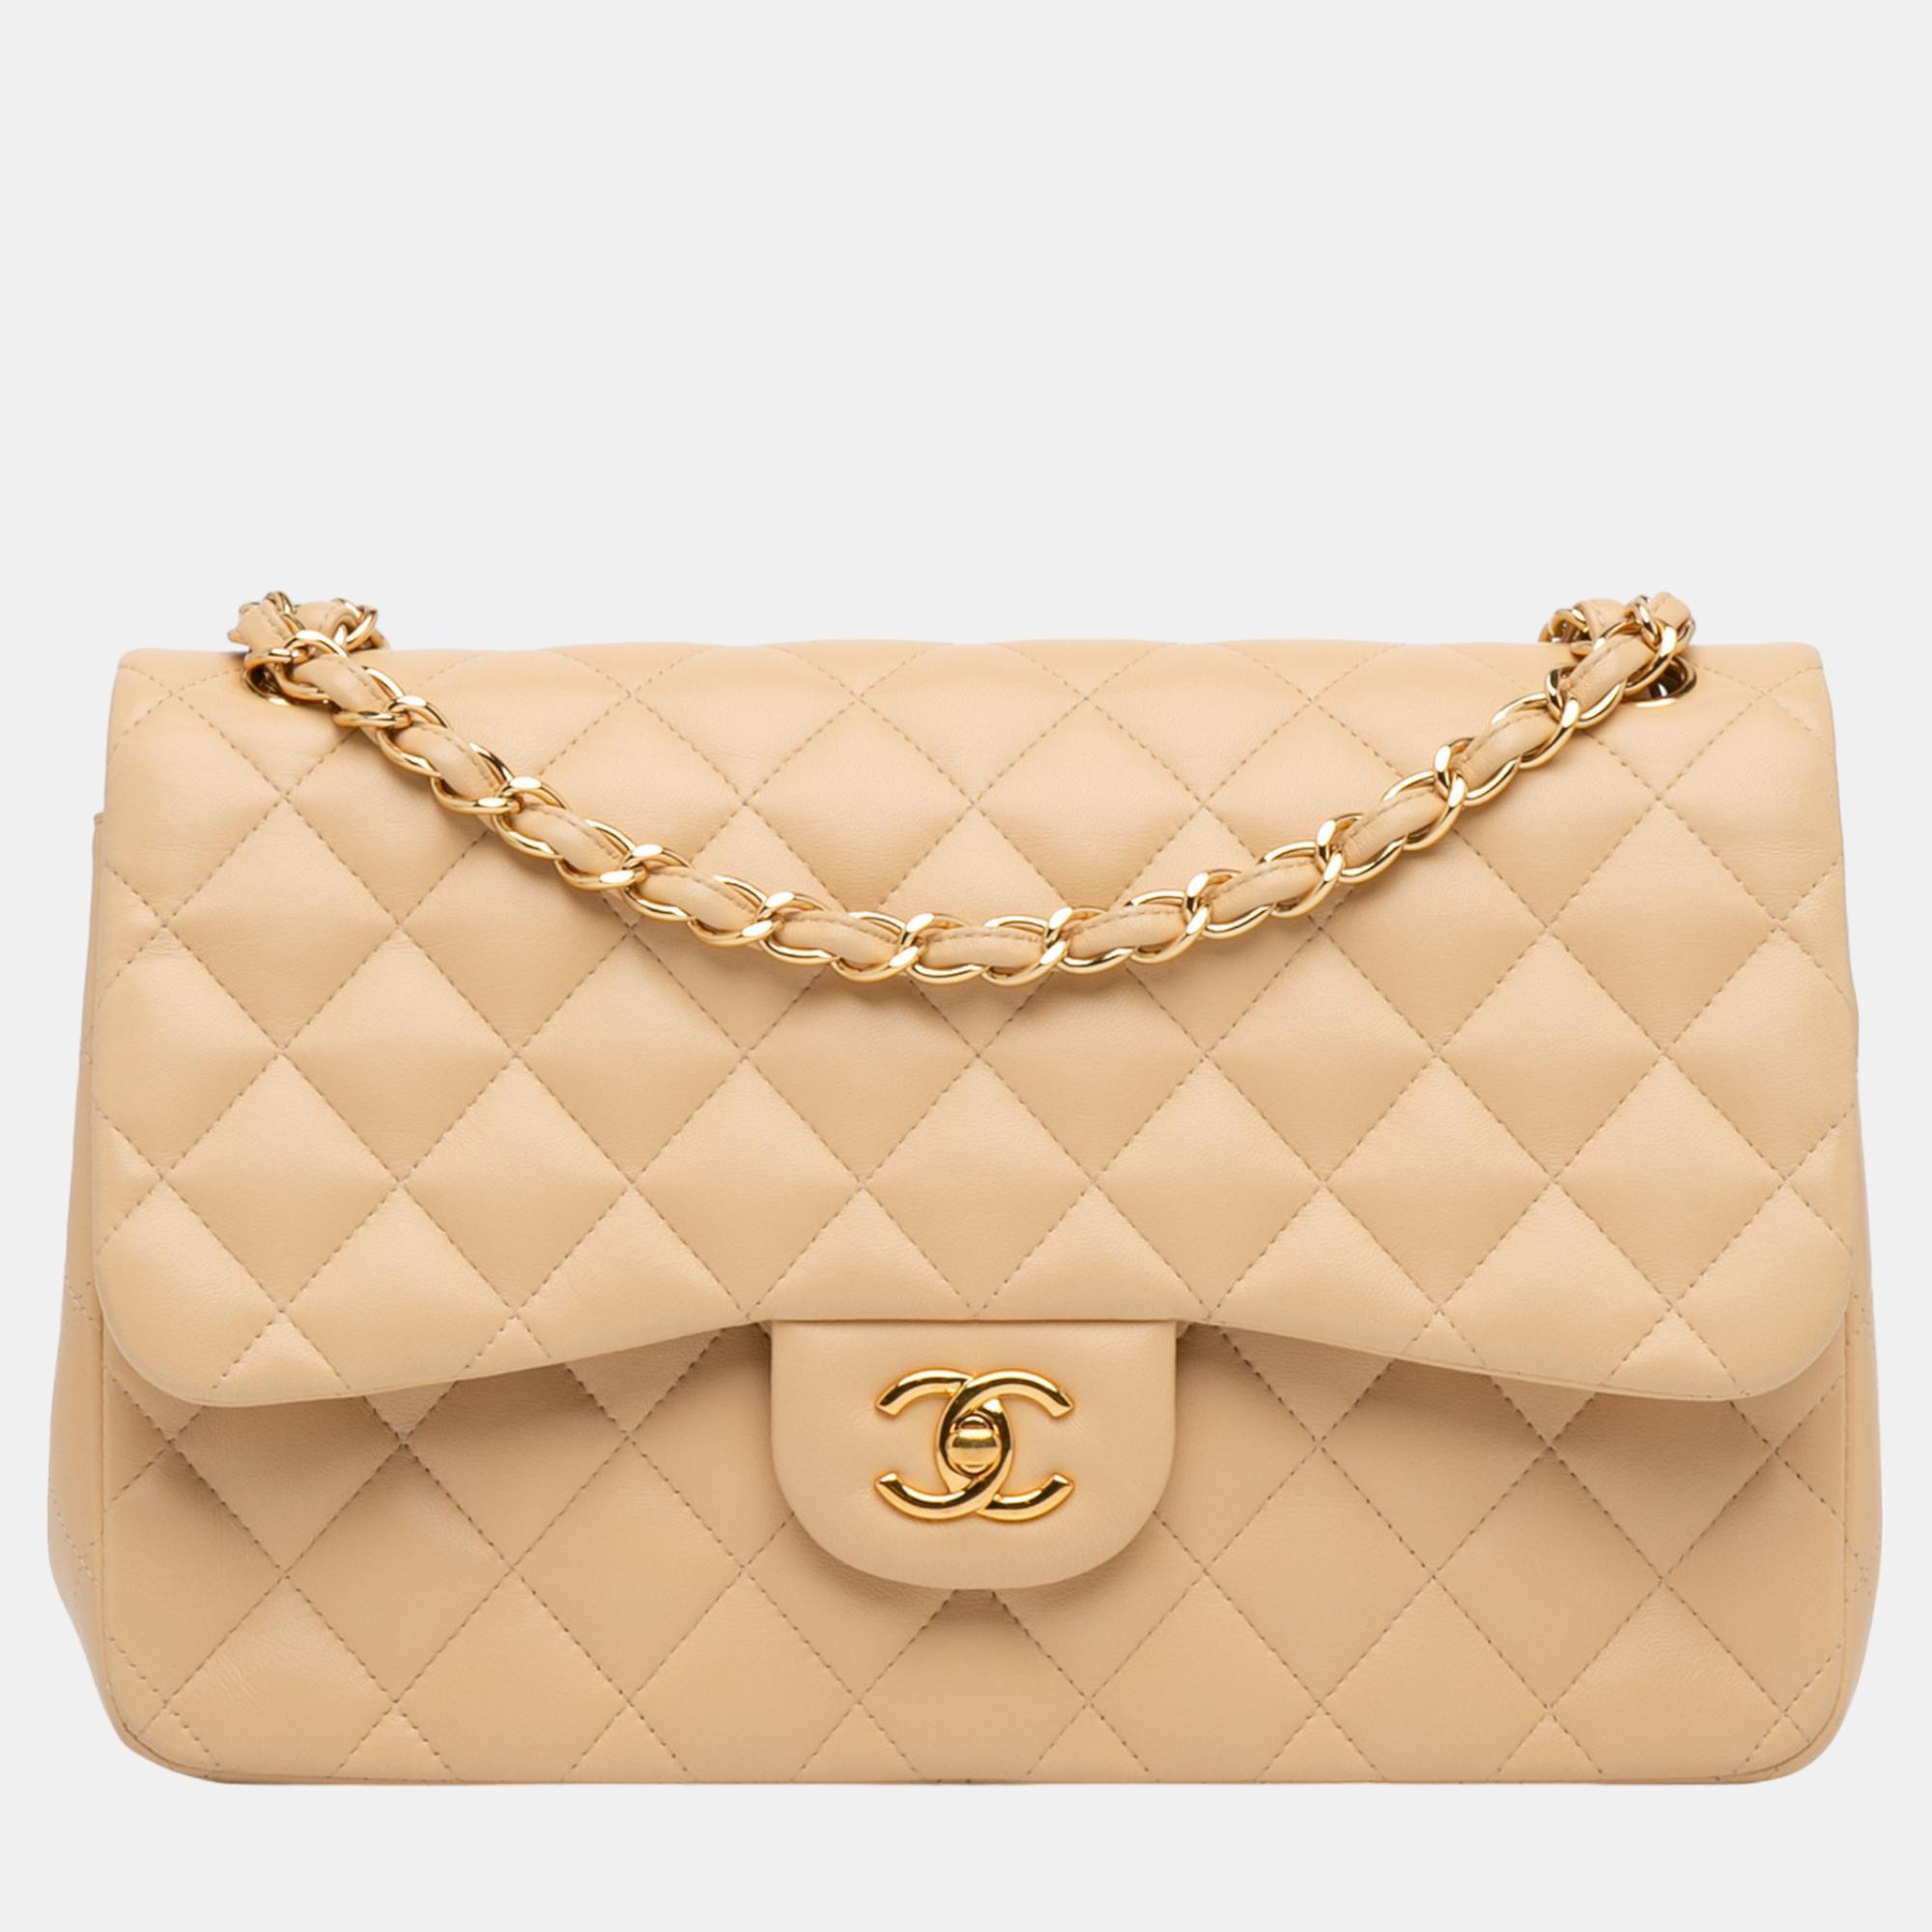 Chanel beige jumbo classic lambskin double flap